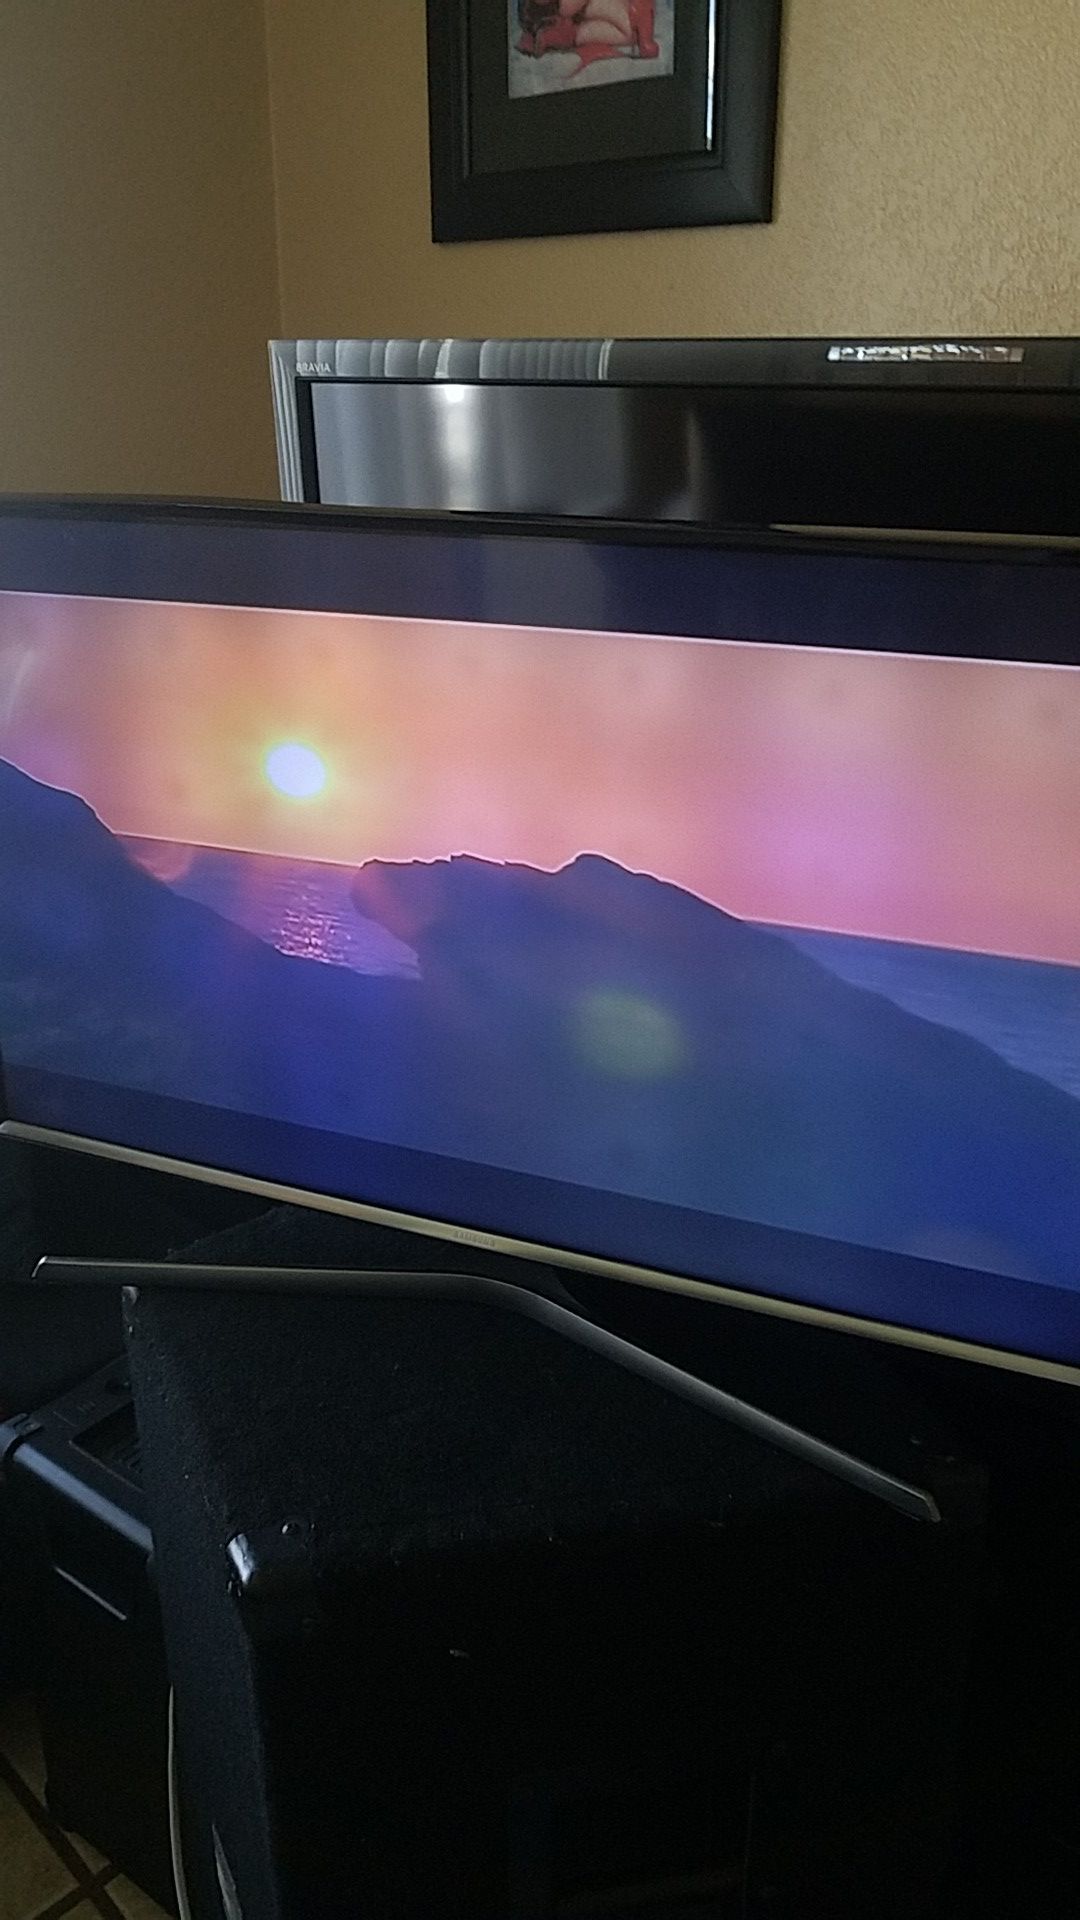 Samsung flat screen TV 32 inch